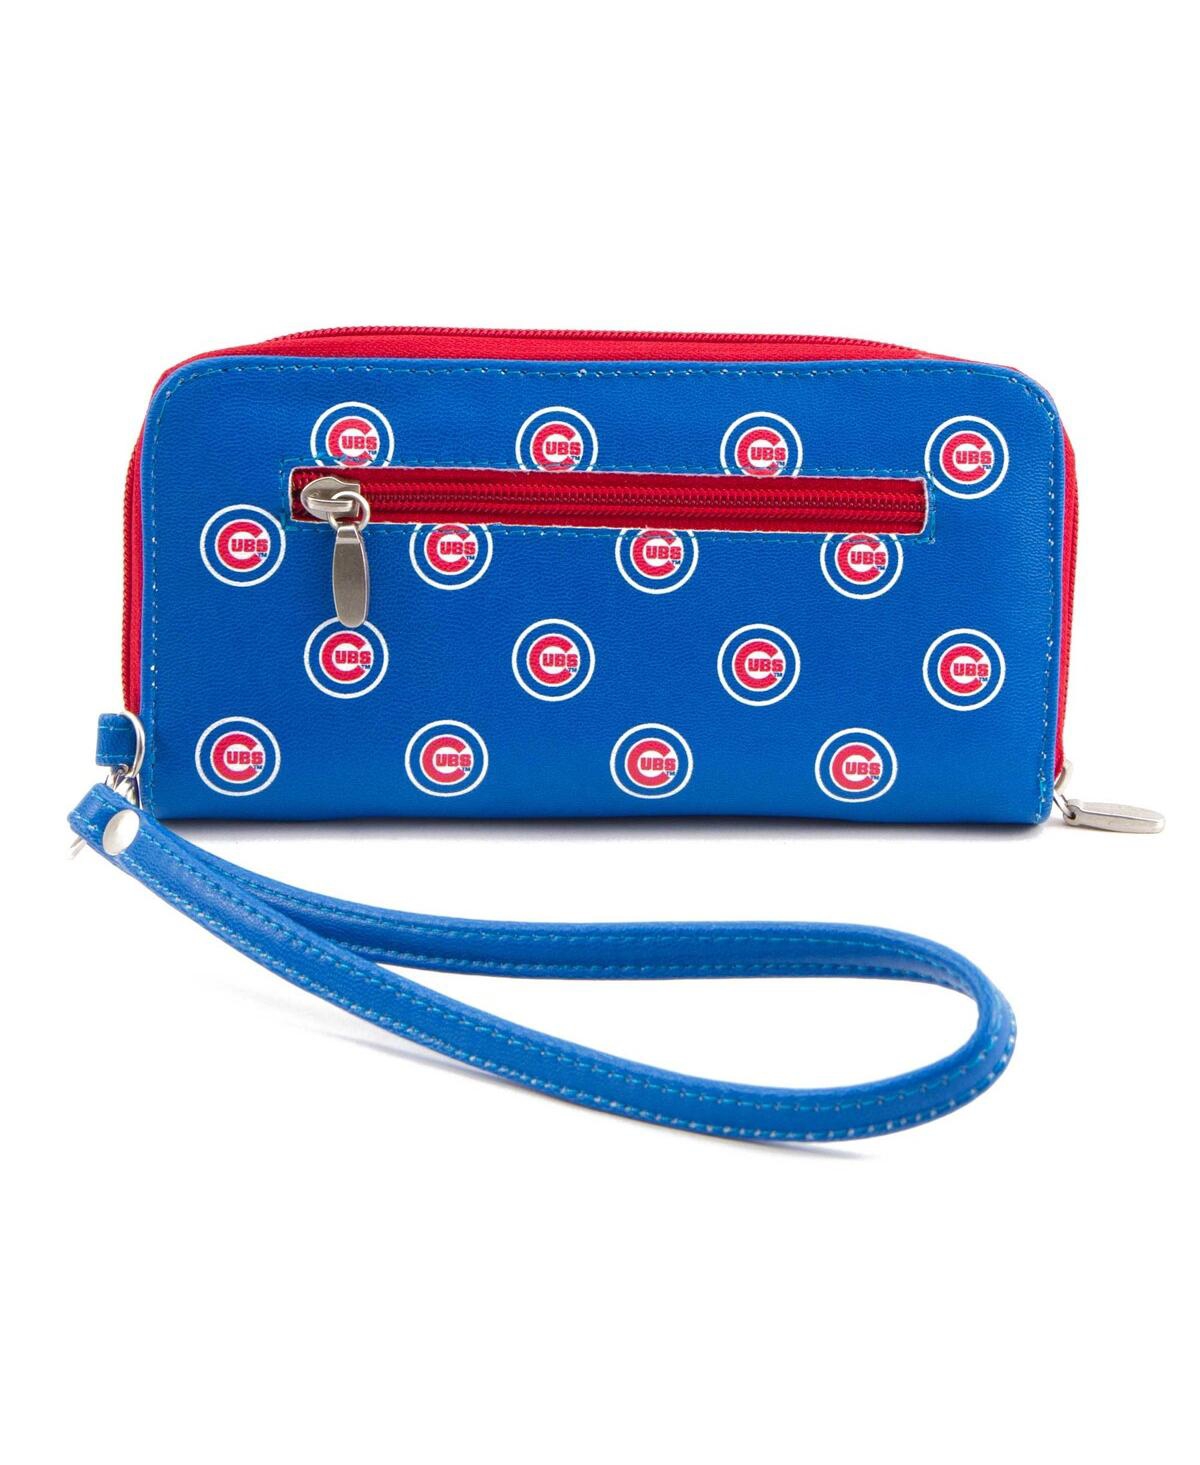 Women's Chicago Cubs Zip-Around Wristlet Wallet - Blue